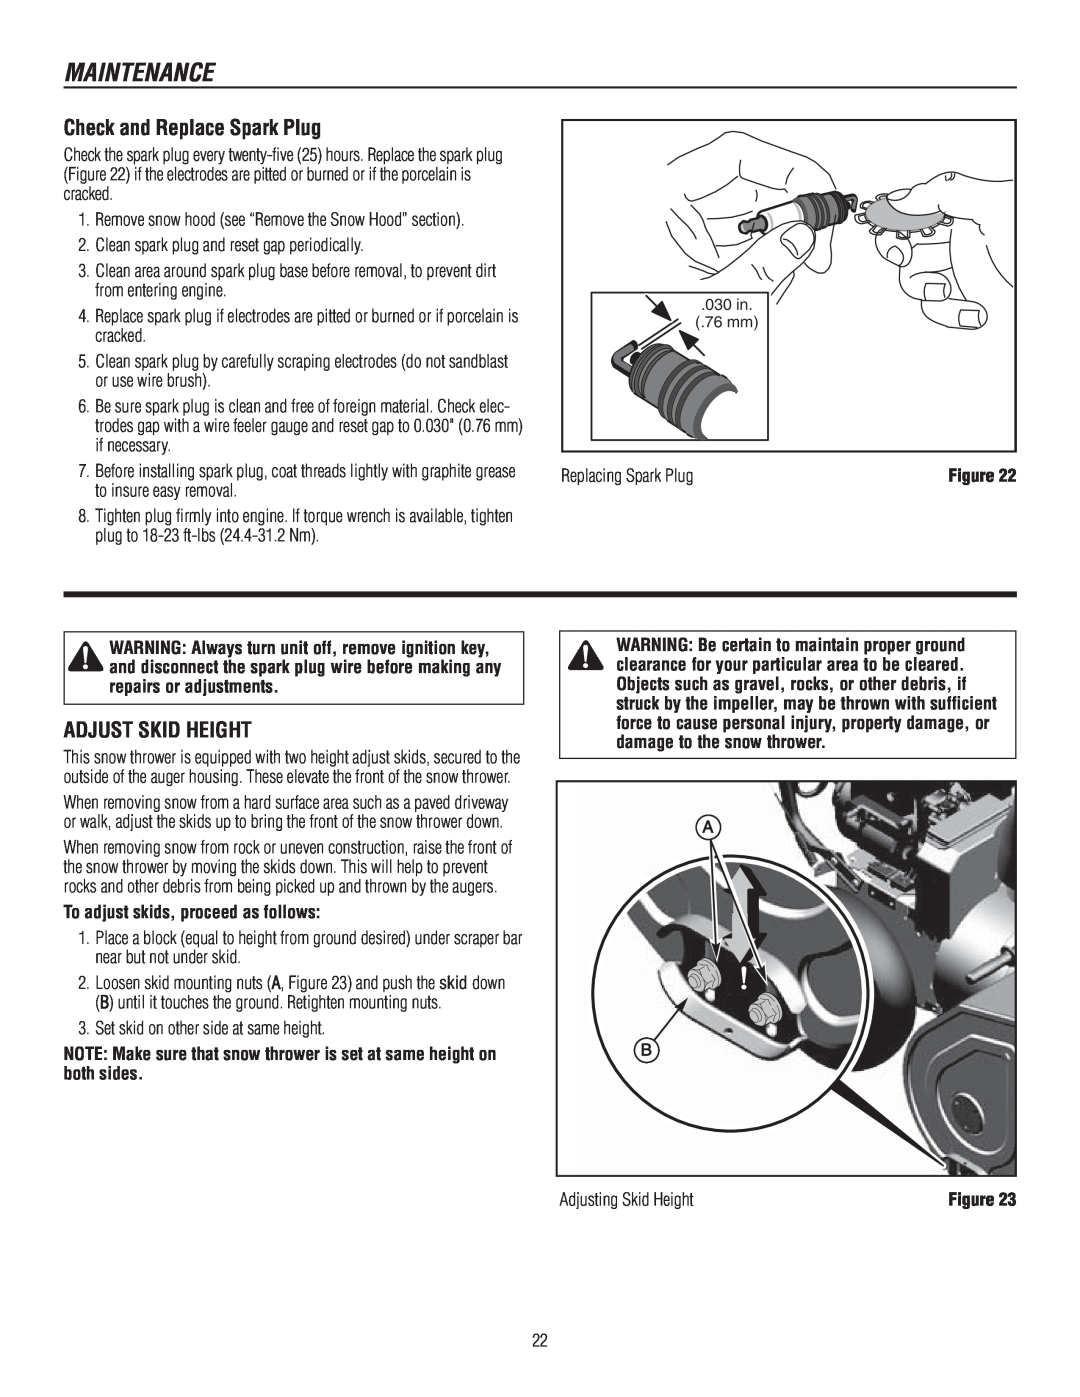 Murray 1695722, 1737920 manual Check and Replace Spark Plug, Adjust Skid Height, Maintenance, Adjusting Skid Height 